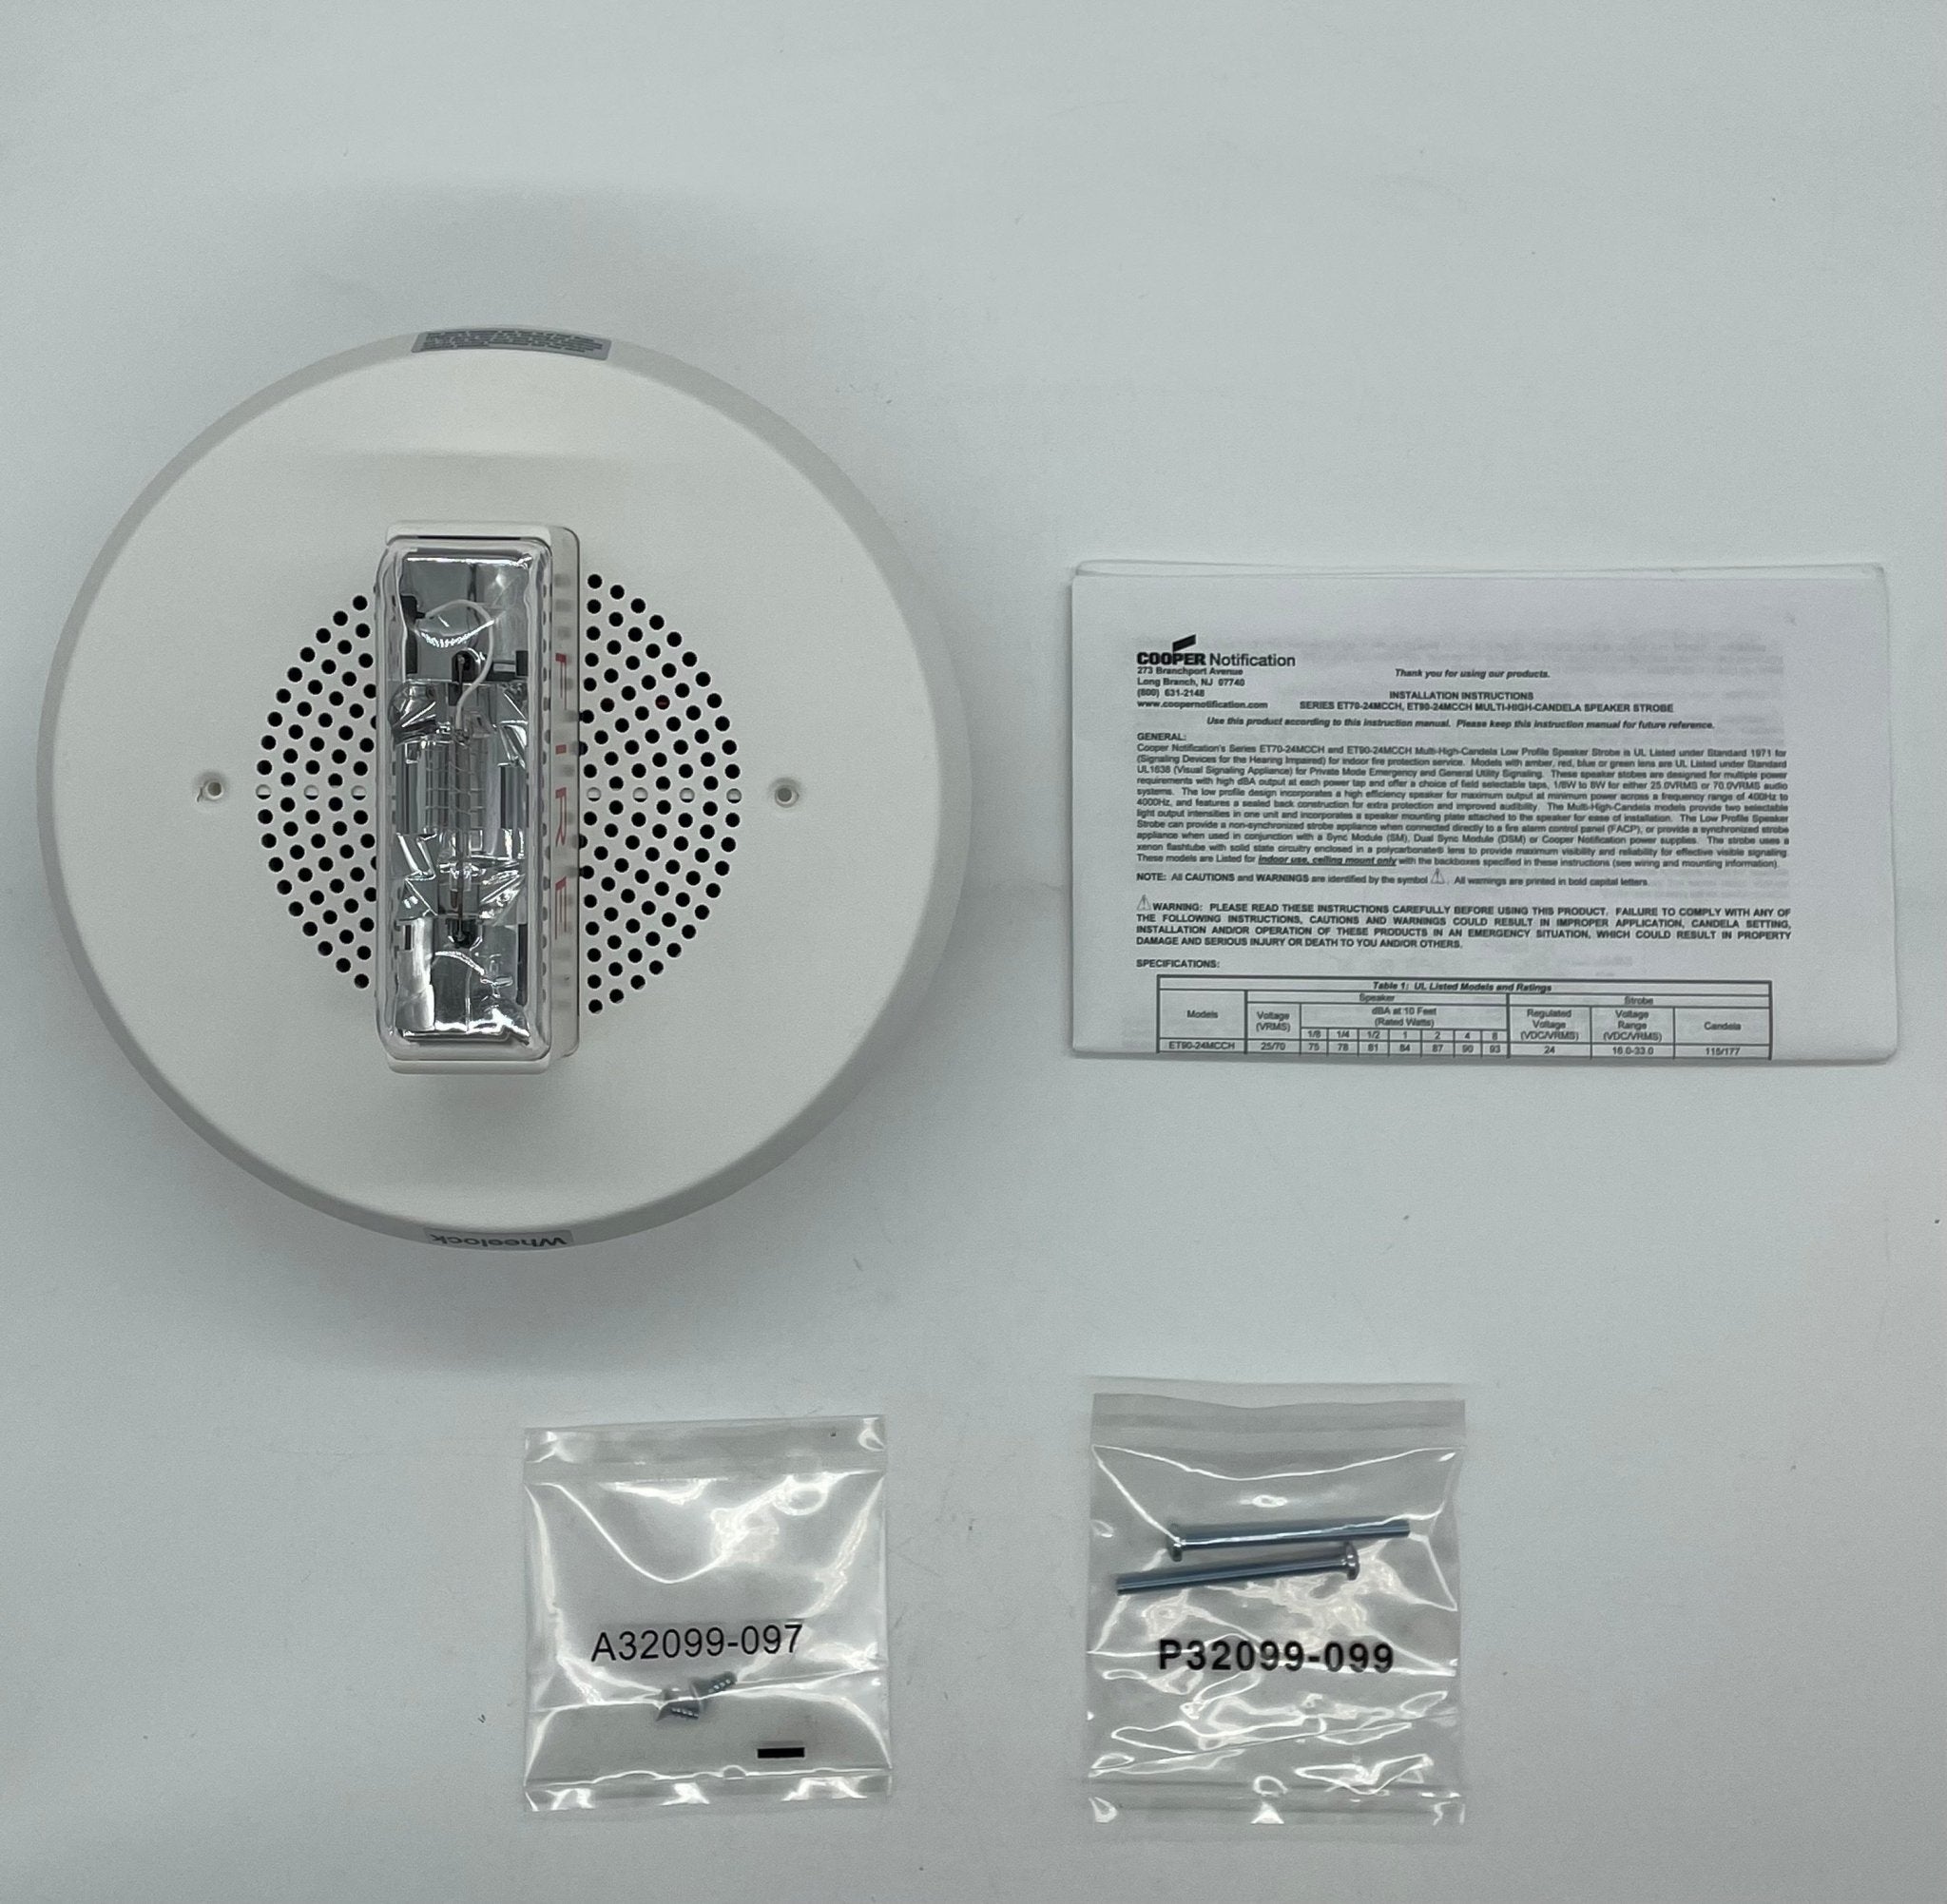 Wheelock ET90-24MCCH-FW - The Fire Alarm Supplier